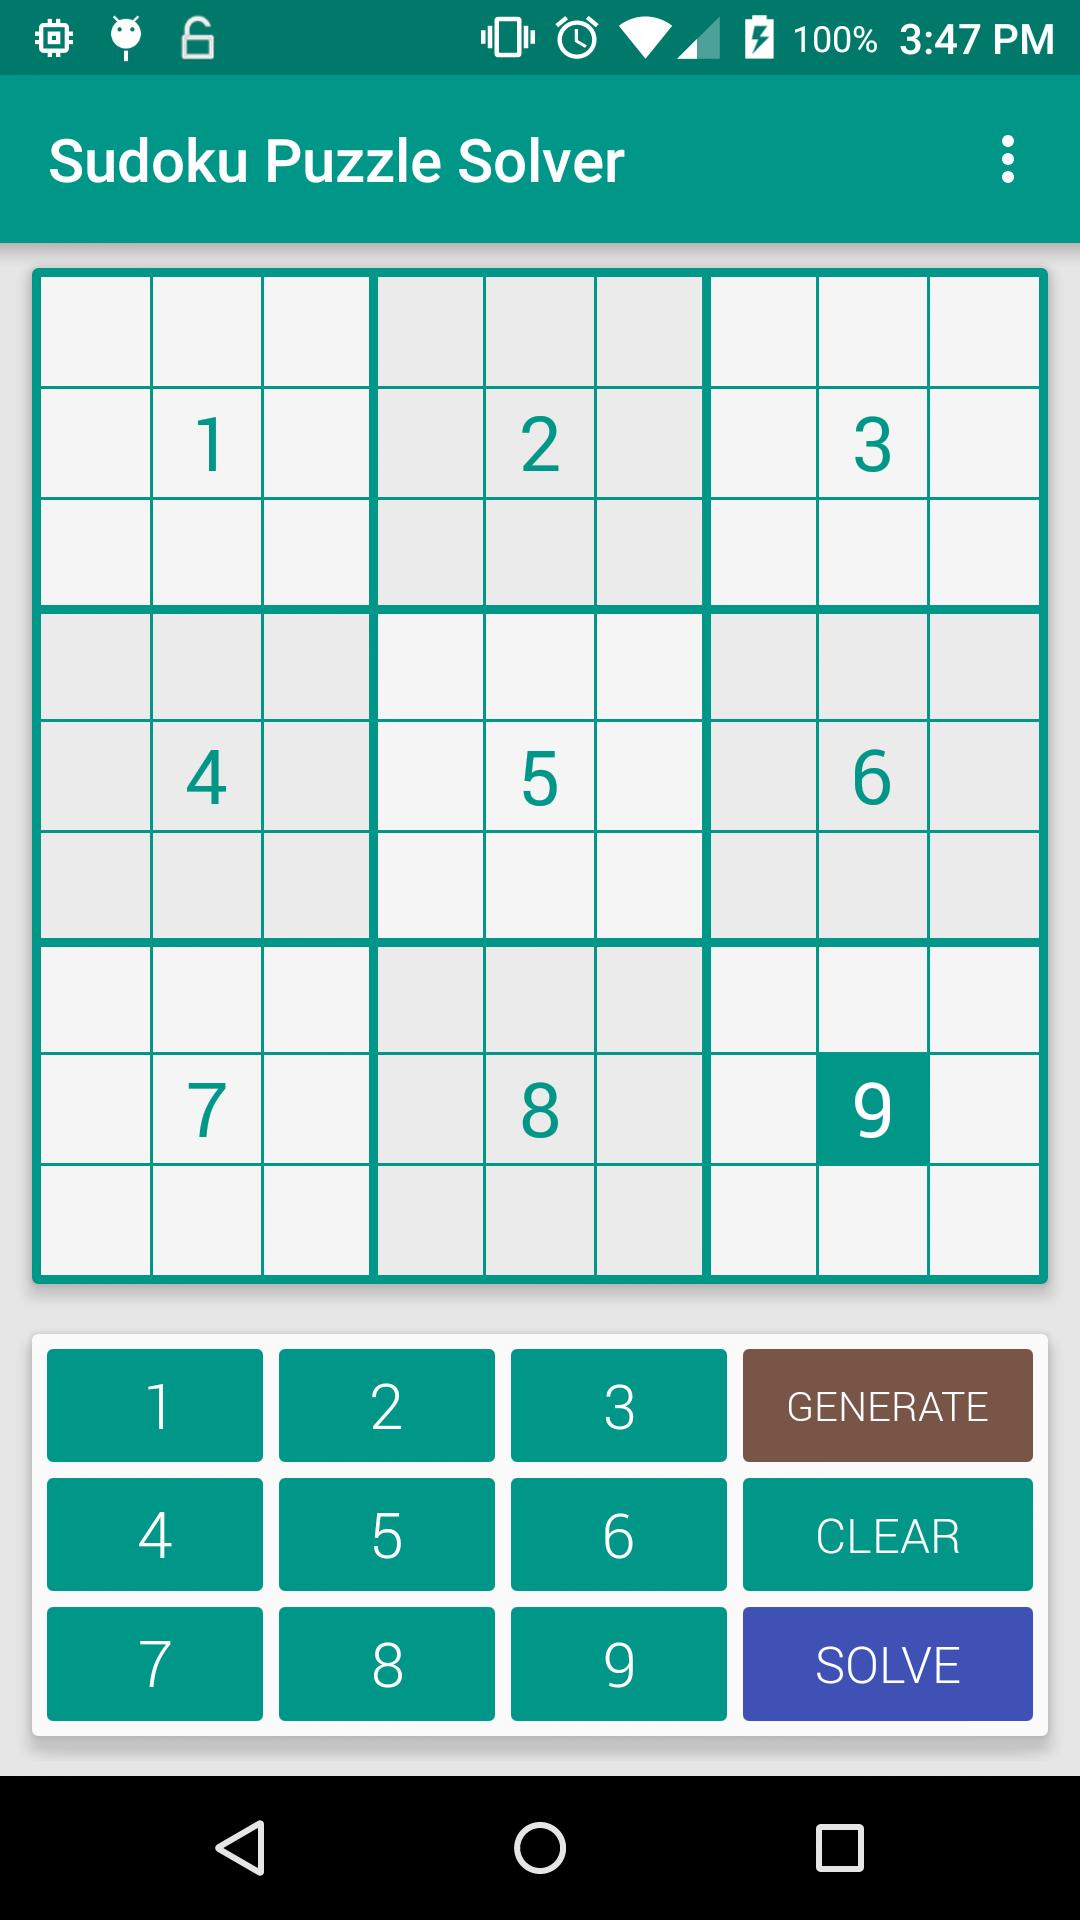 download-do-apk-de-sudoku-puzzle-solver-para-android